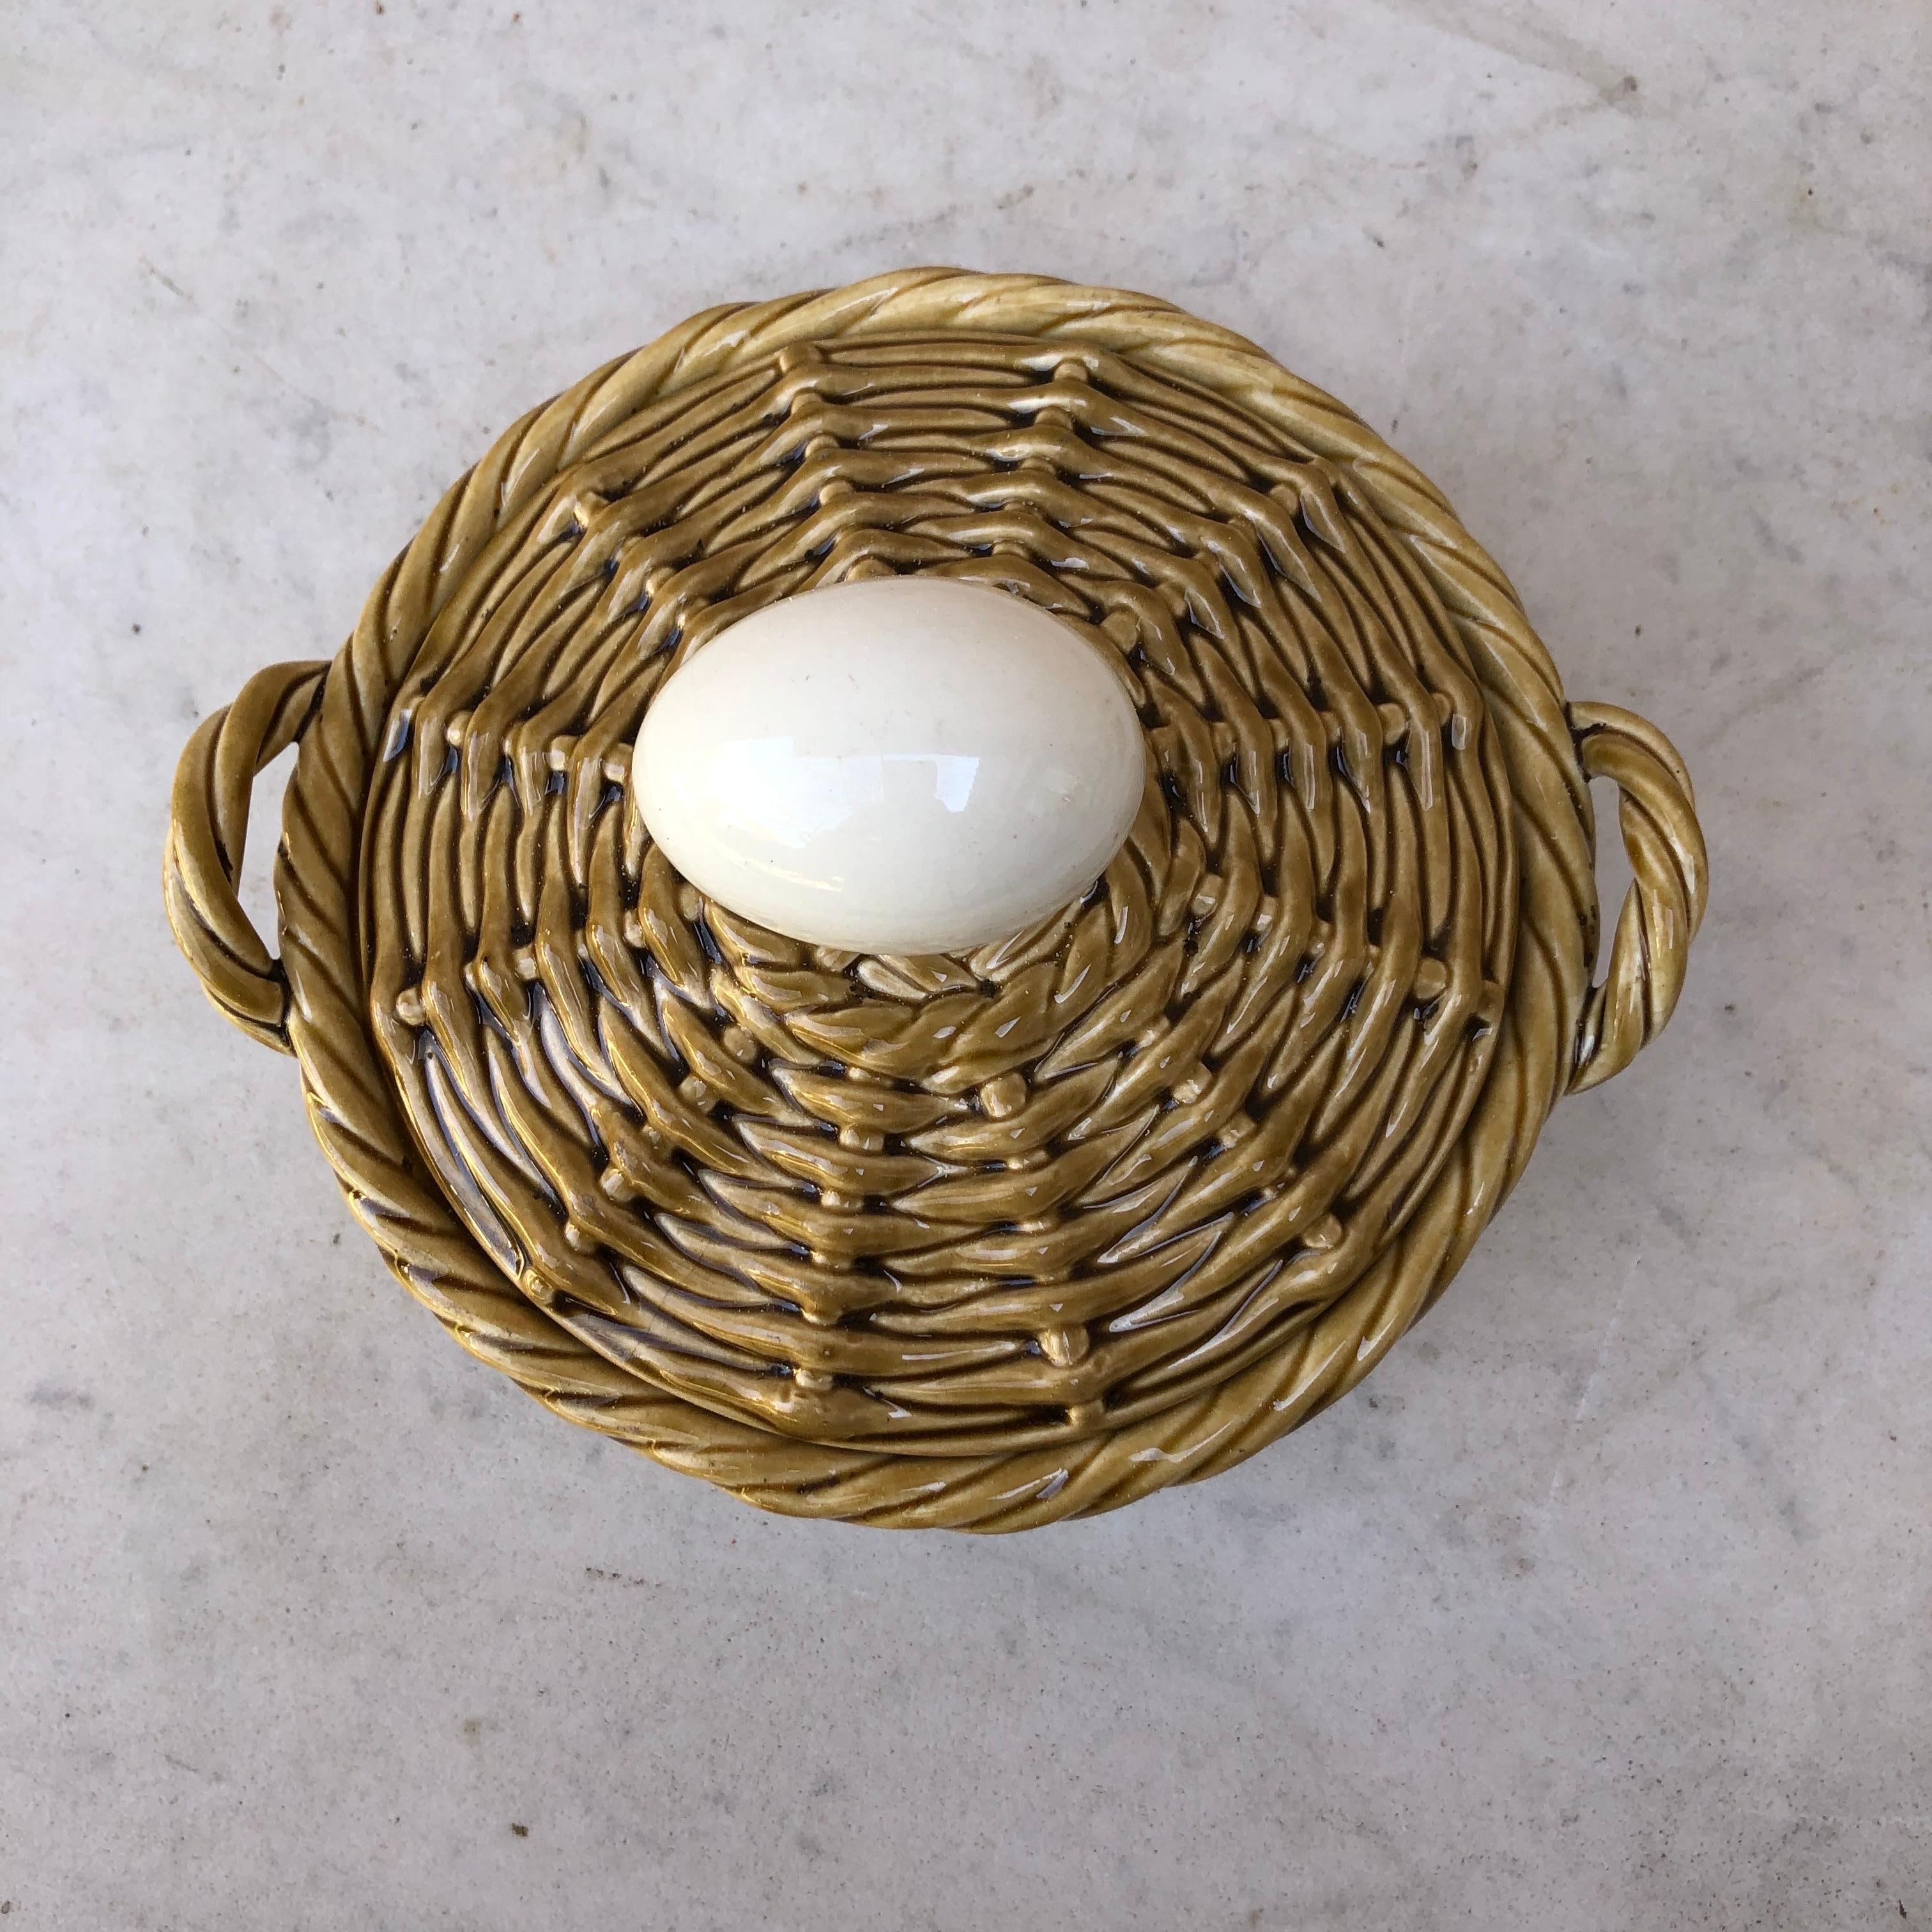 Rustic French Majolica Egg Basket Sarreguemines, Circa 1900